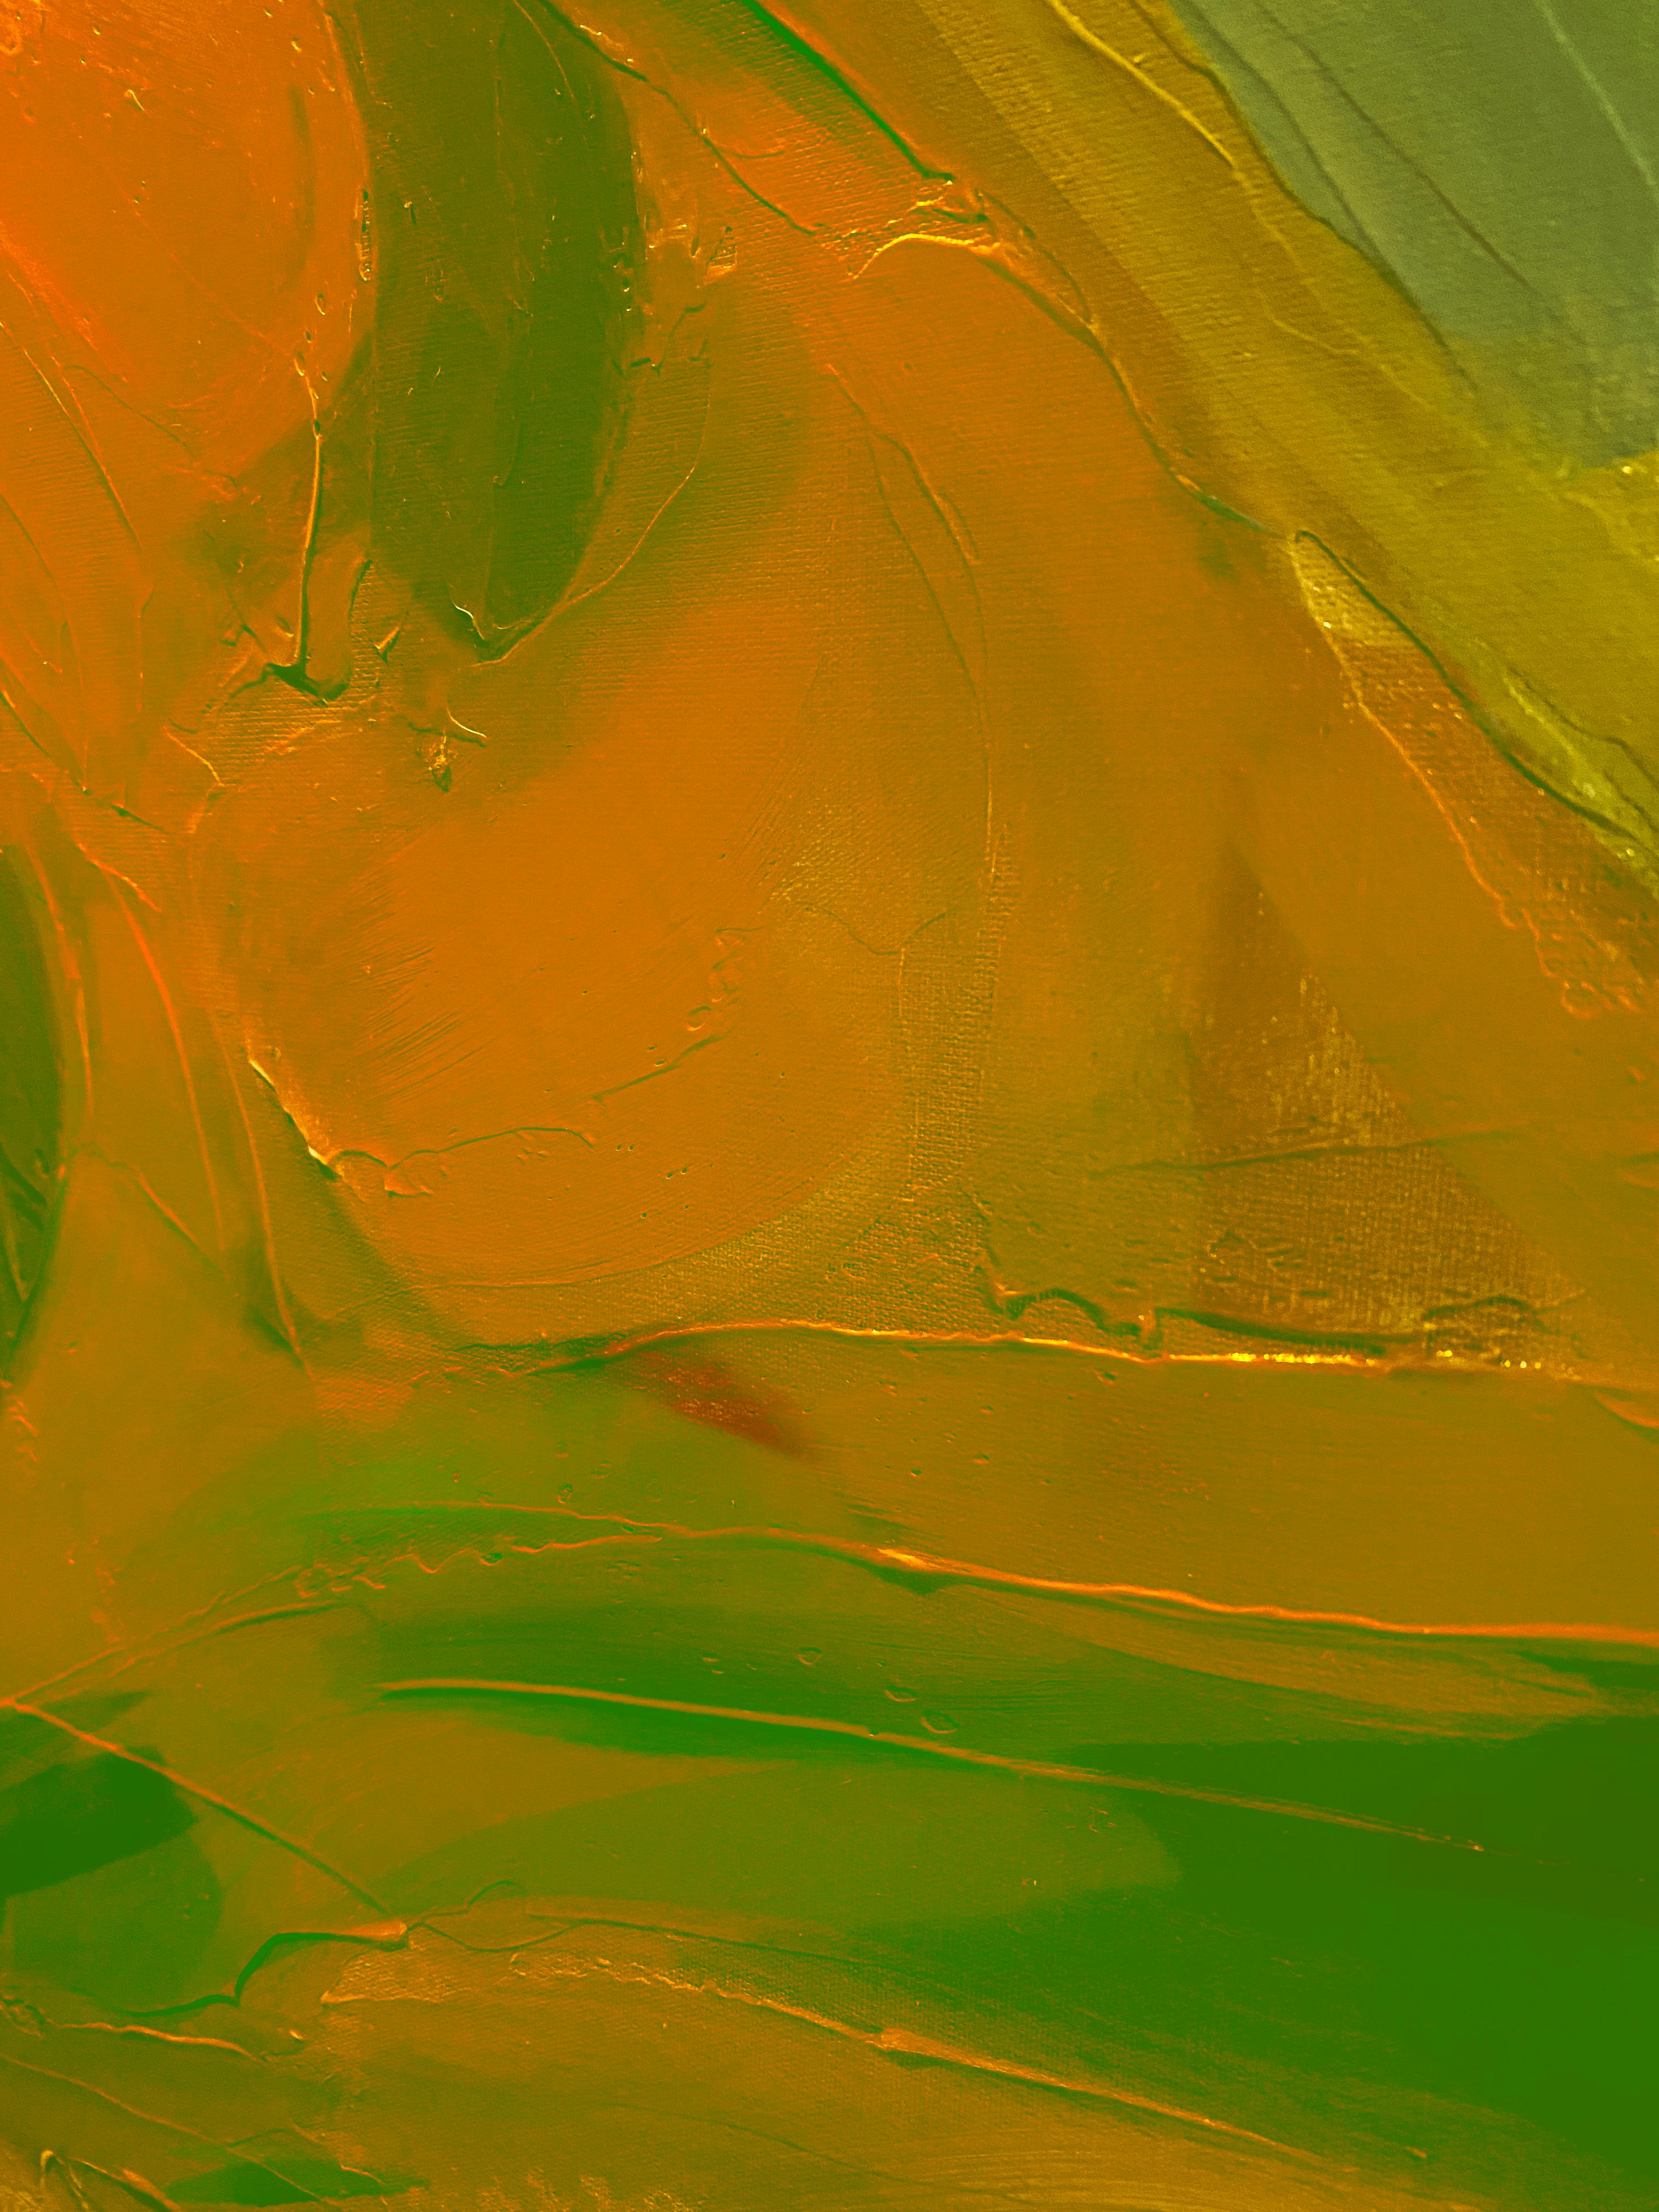 Abstrakt Hell und abstrakt  Sunshine Bohemian Green Mixed Media auf Leinwand 45x45